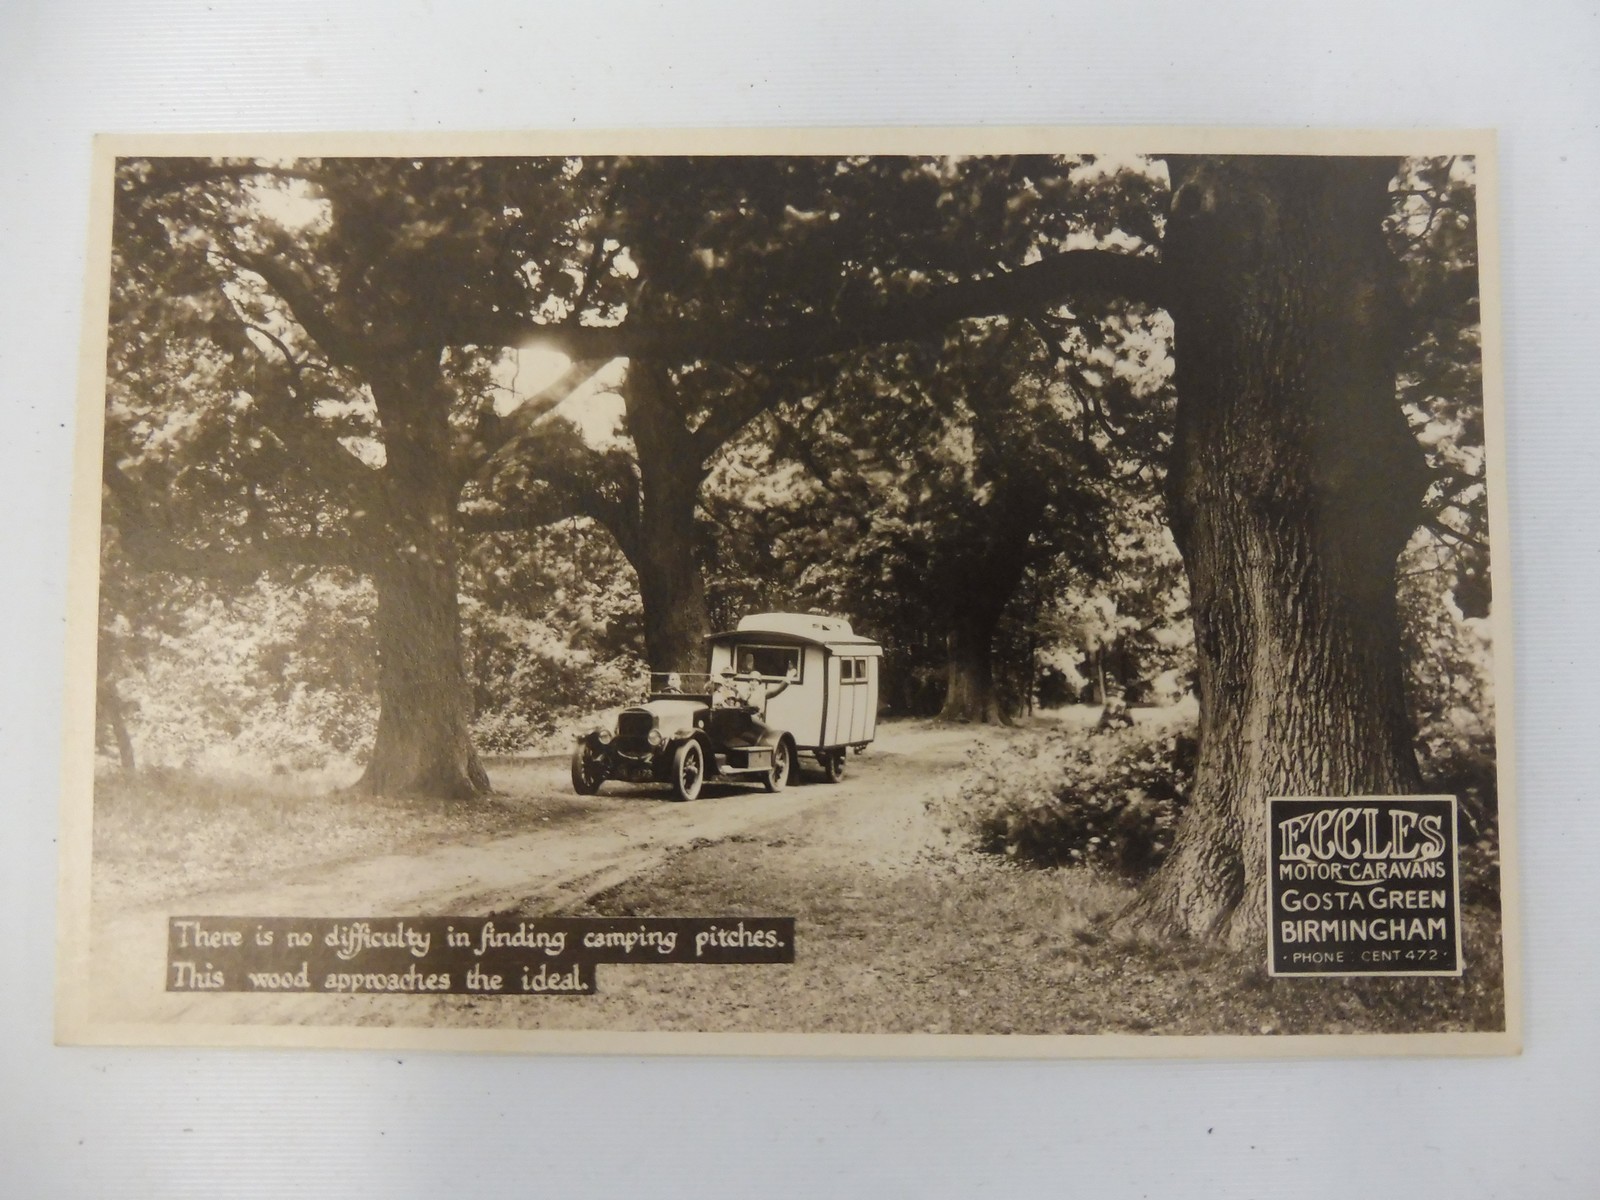 A rare Eccles Caravans pictorial postcard depicting an early vintage car pulling a caravan.